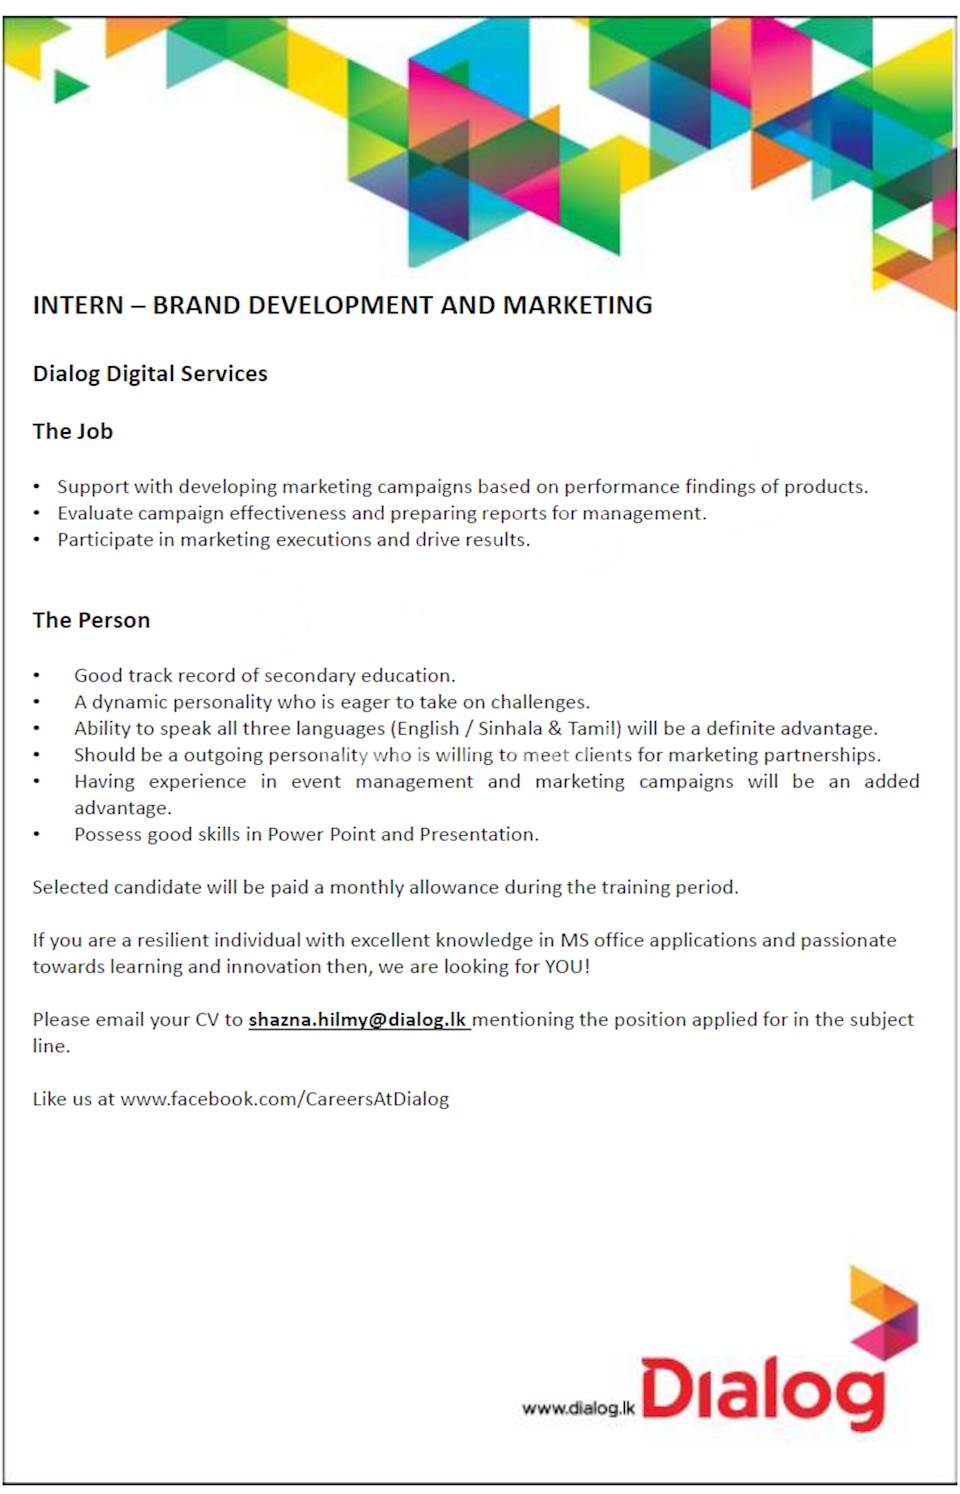 Intern - Brand Development and Marketing